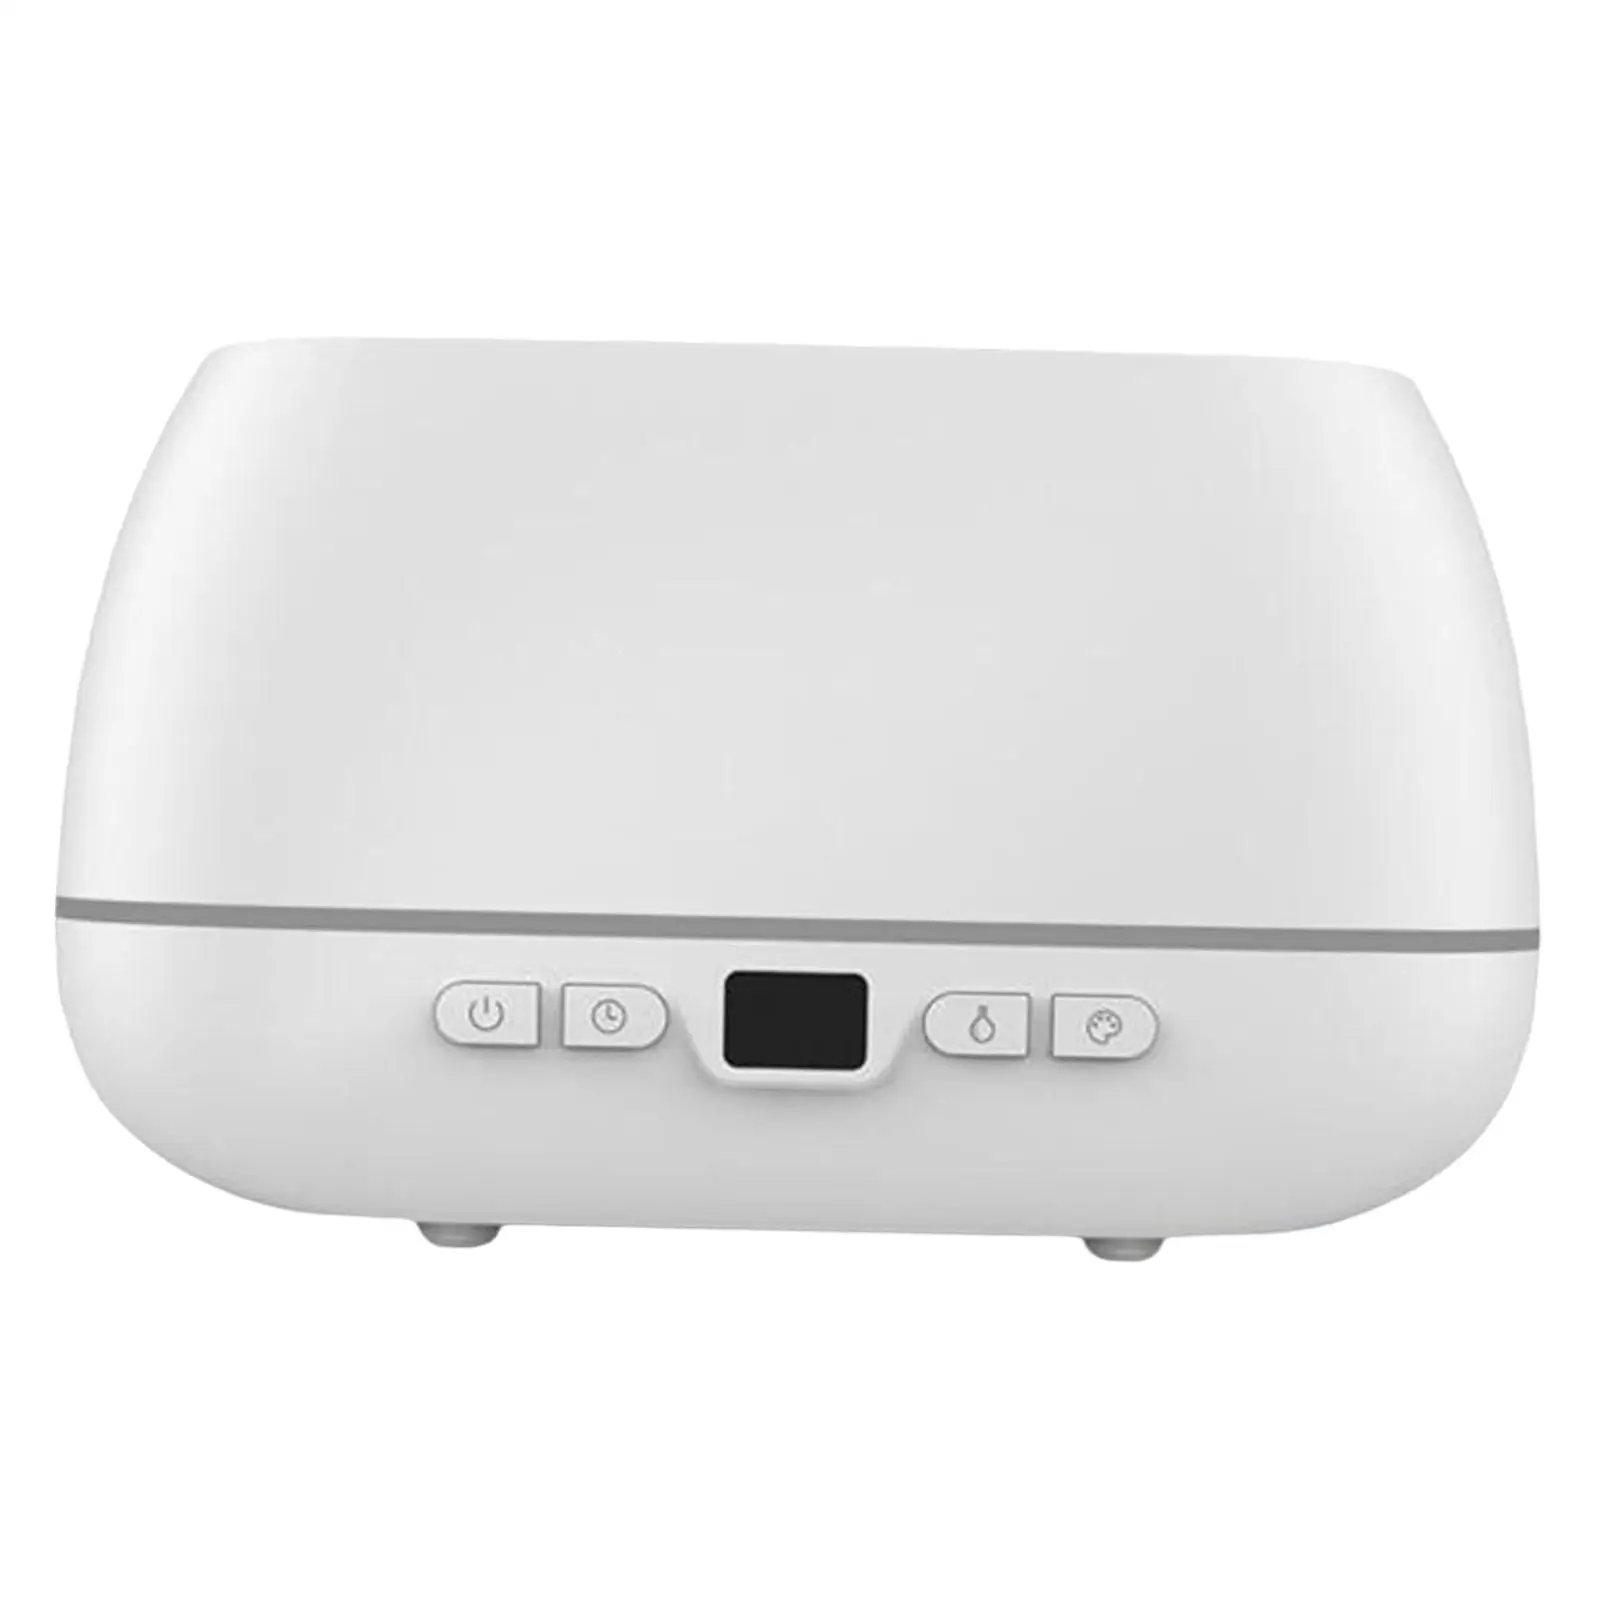 LED Humidifier Diffuser Remote Control Portable USB for Bedroom Desktop